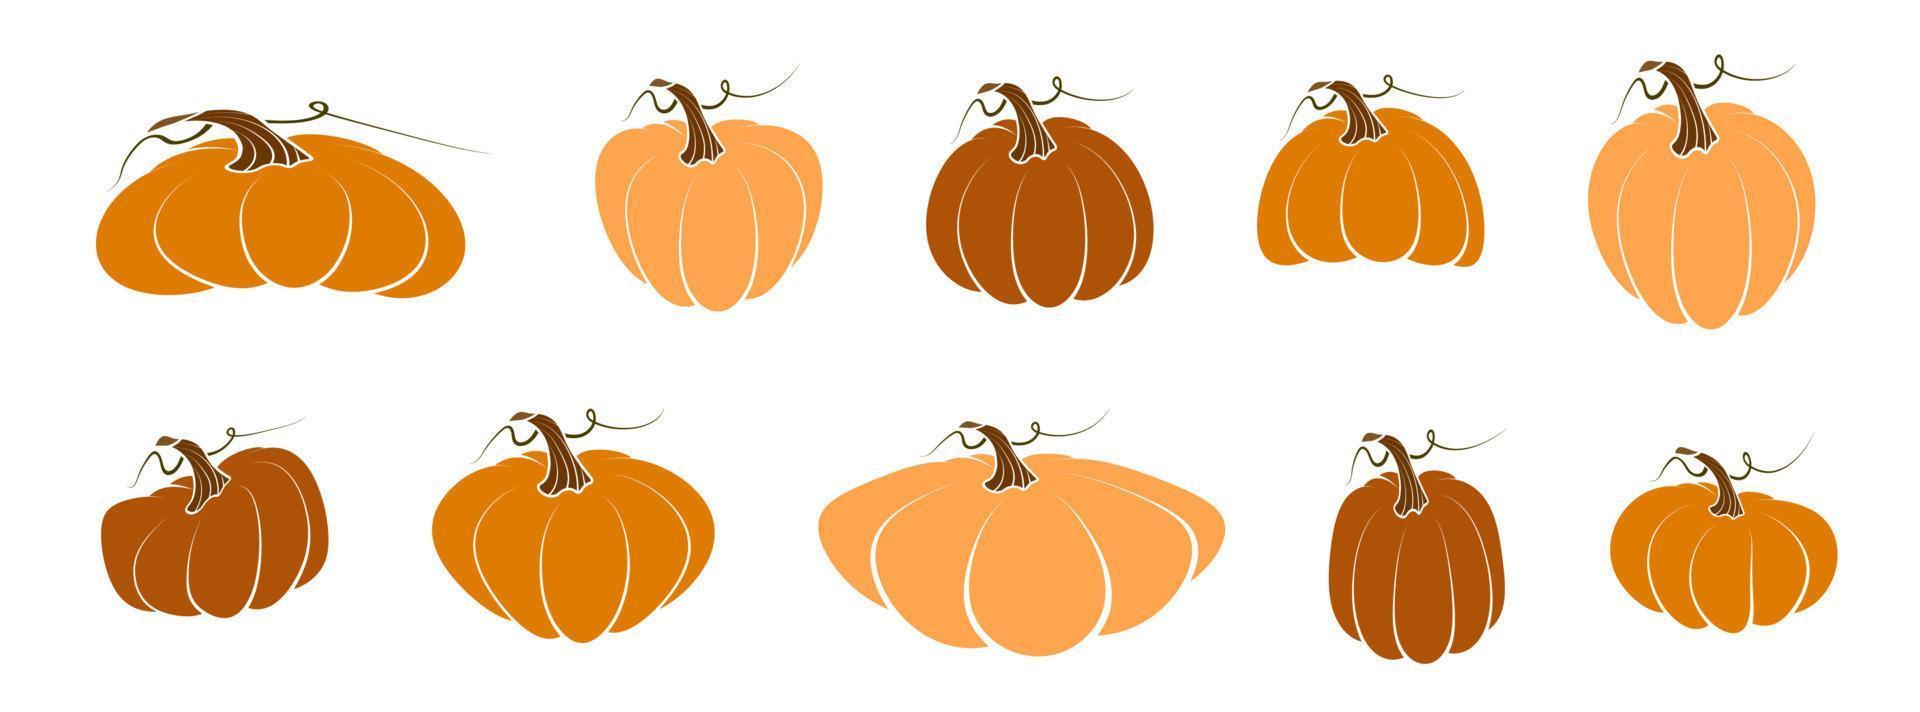 pumpkin fruit set. Autumn harvest. Autumn Halloween pumpkins. Edible plants. Isolated vector on white background in flat style